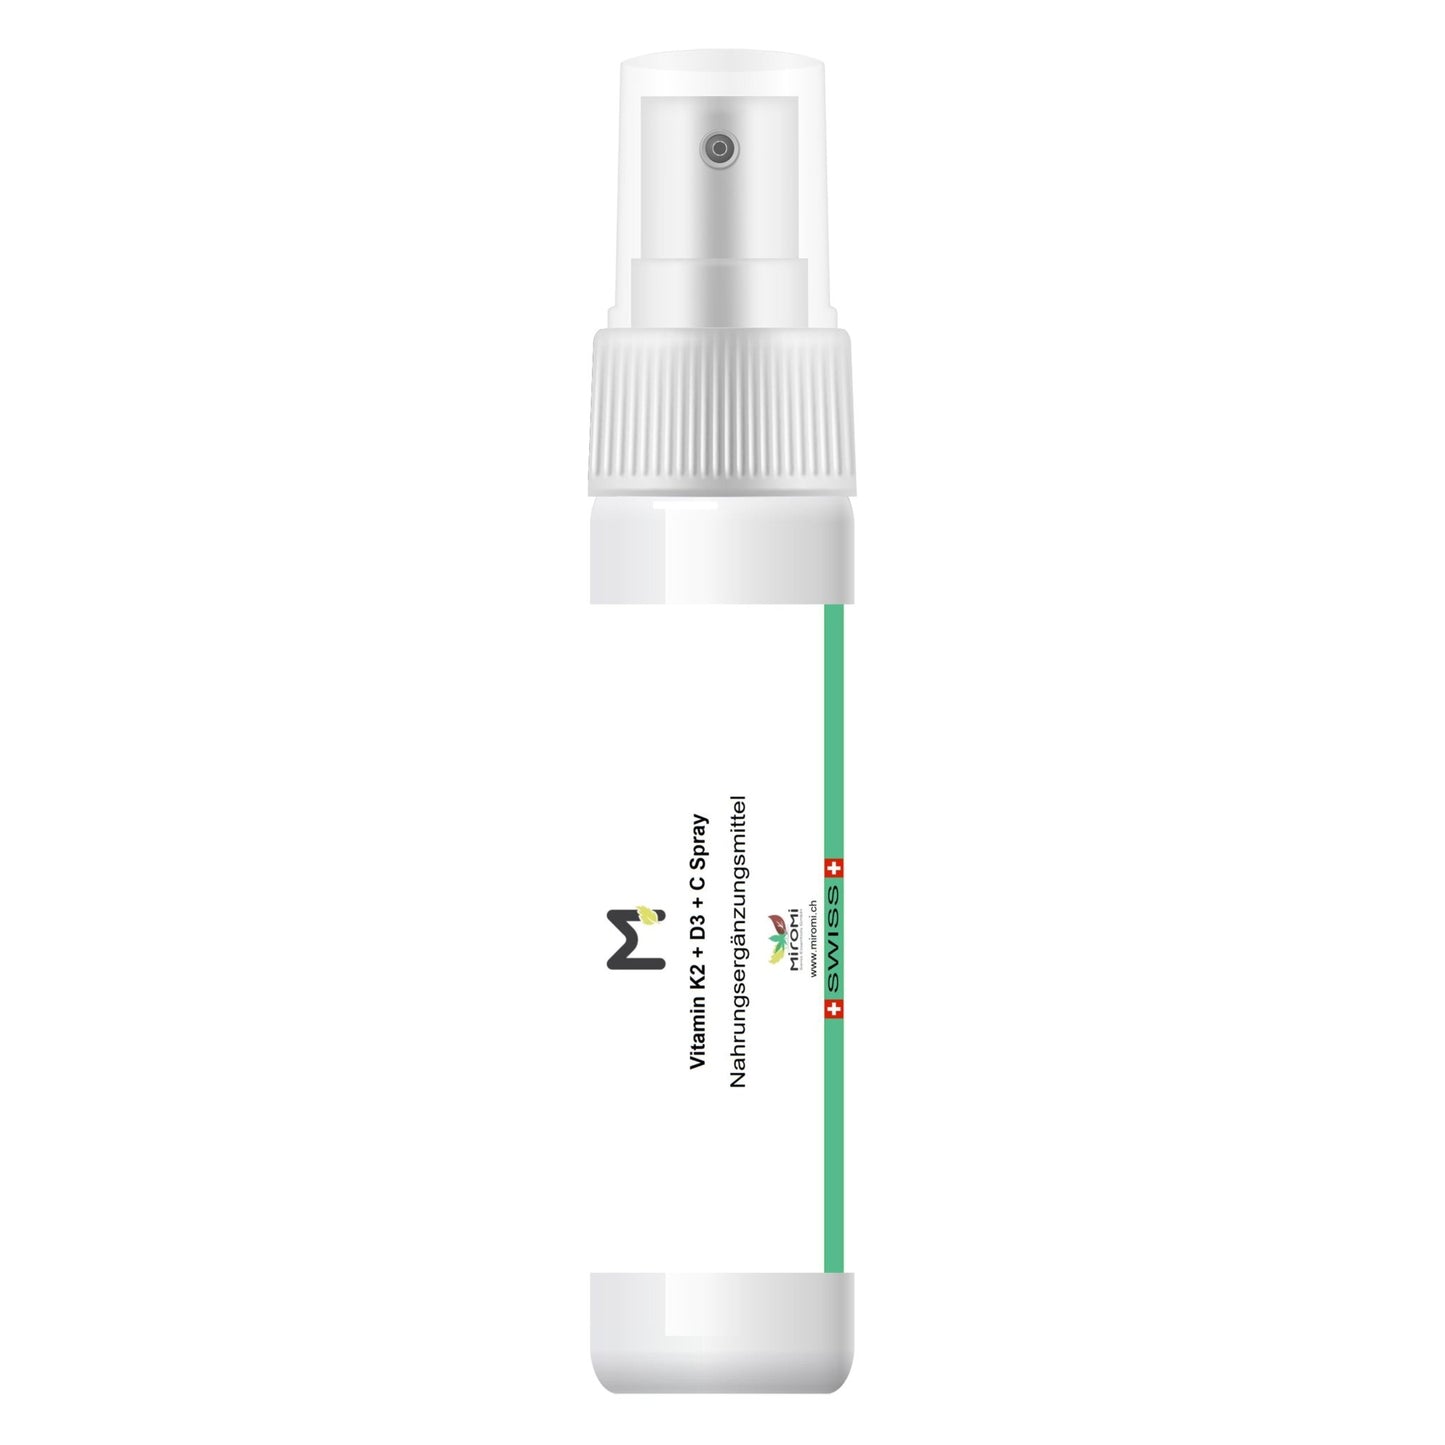 Vitamin K2 + D3 + C Spray - MIROMI - Swiss Essentials GmbH